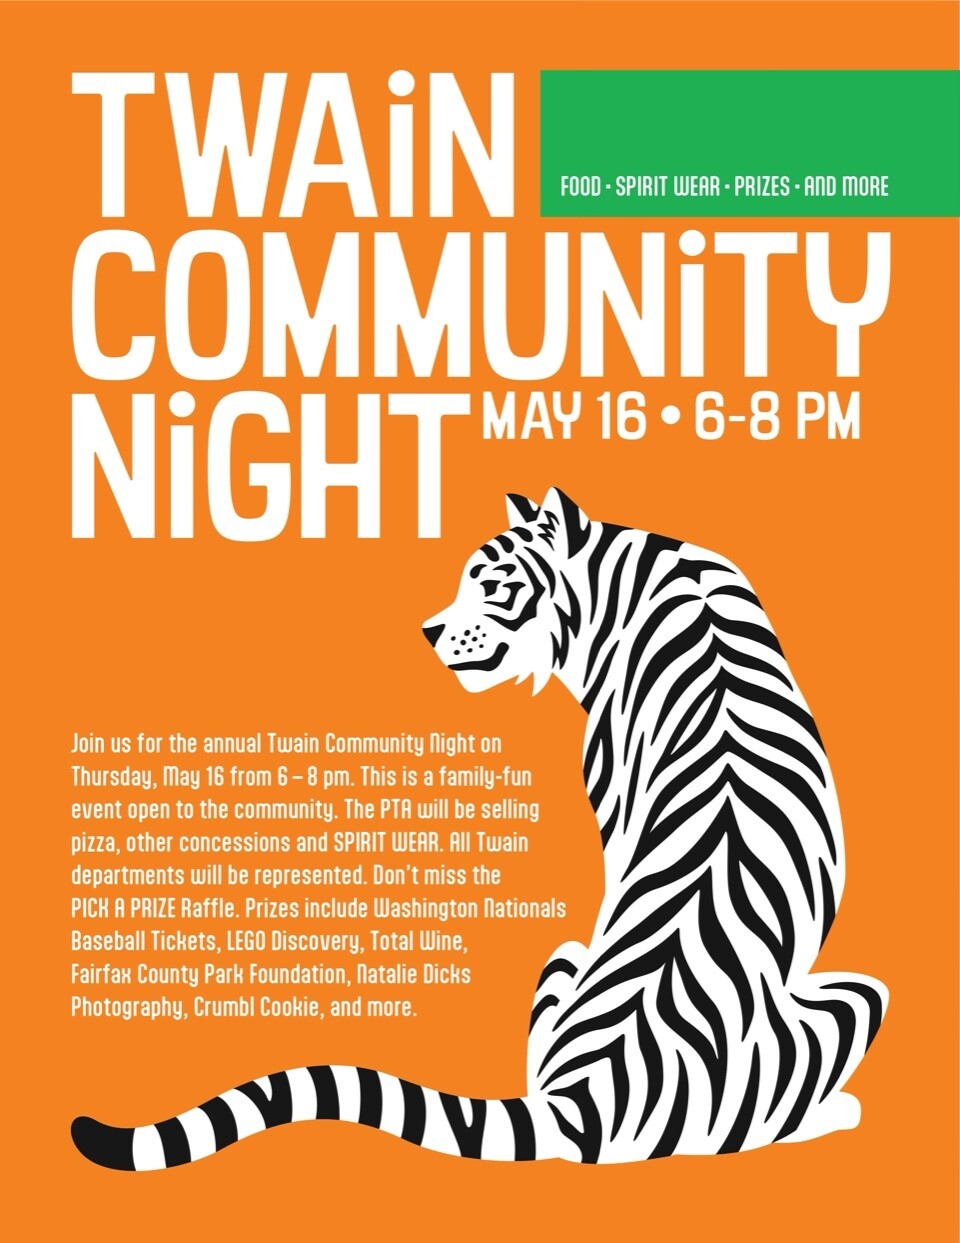 Mark Twain MS Community Night flyer